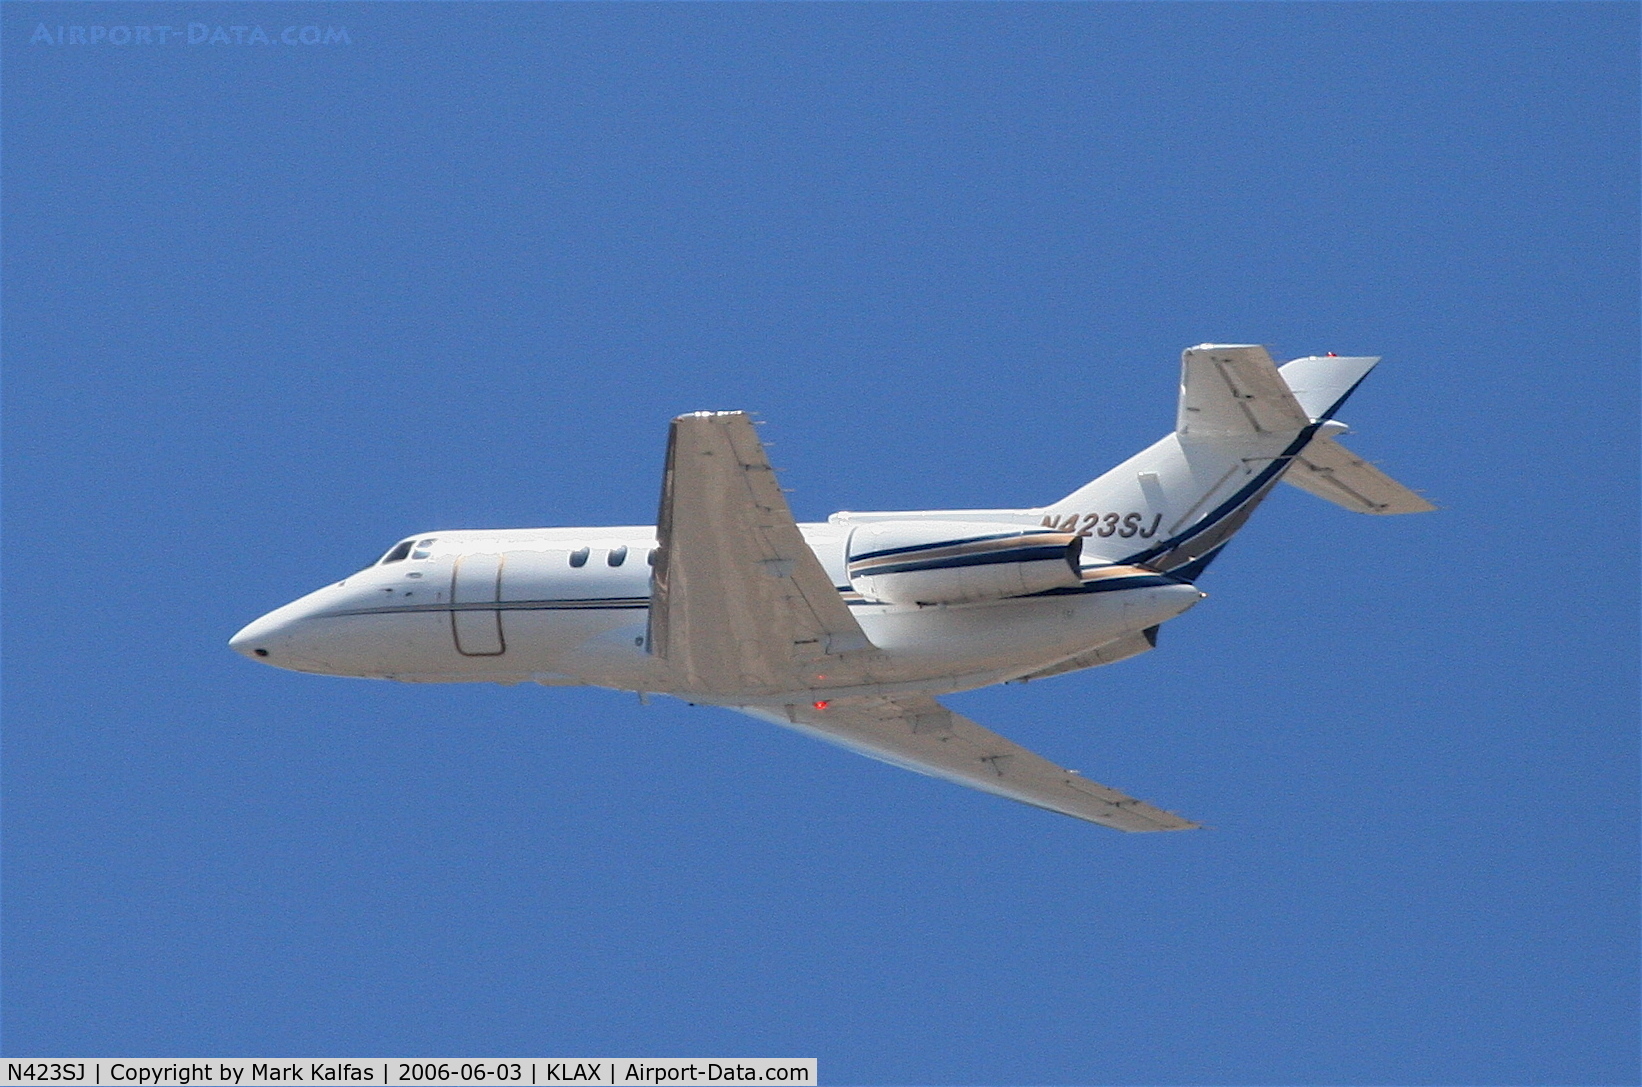 N423SJ, British Aerospace BAe.125 Series 800A C/N 258135, British Aerospace BAE 125 SERIES 800A, N423SJ departing 25L KLAX.